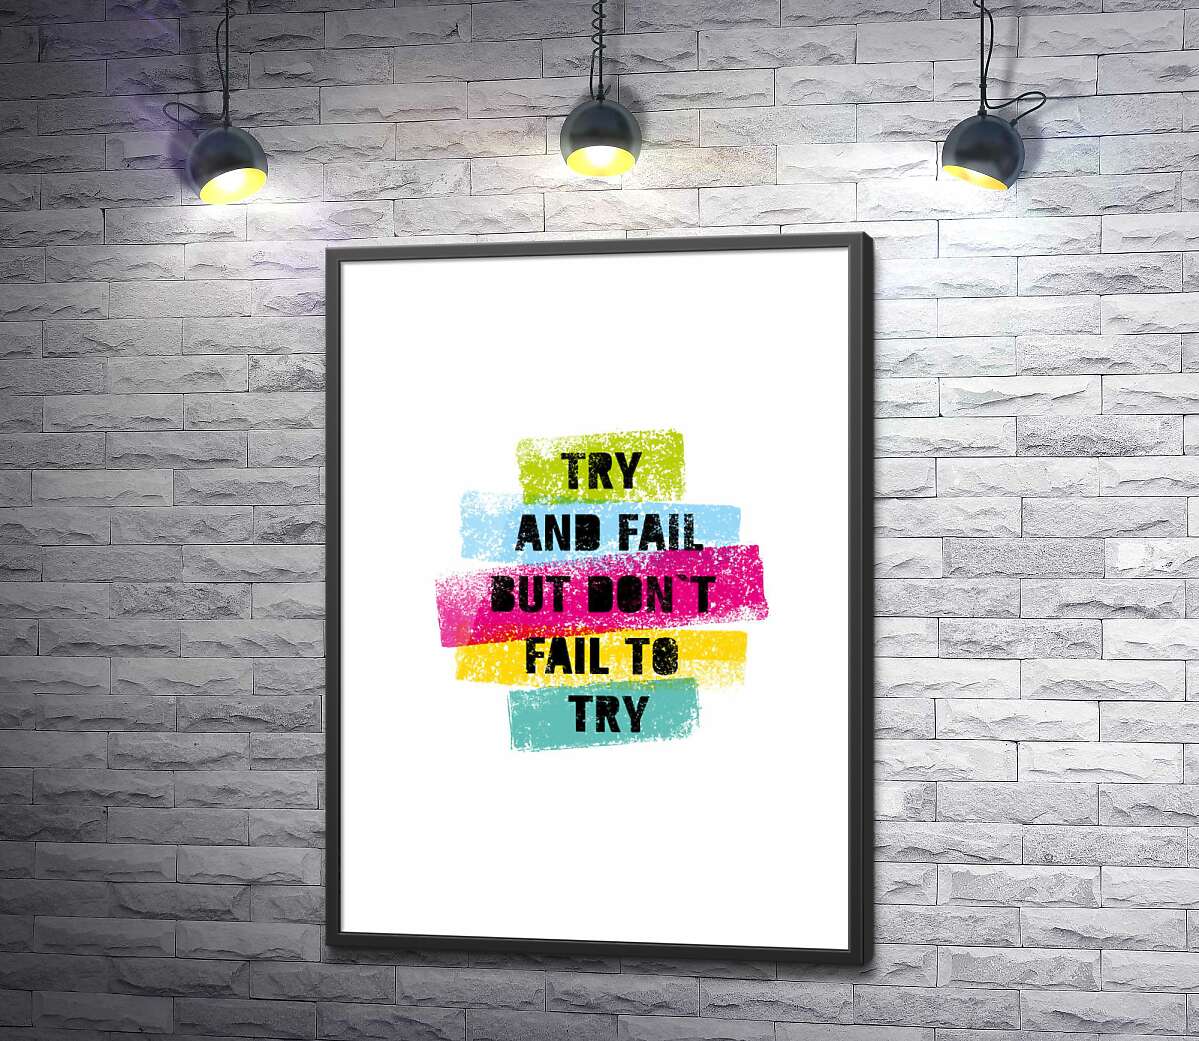 постер Мотивационная фраза "Try and fail but never fail to try" в пастельных тонах